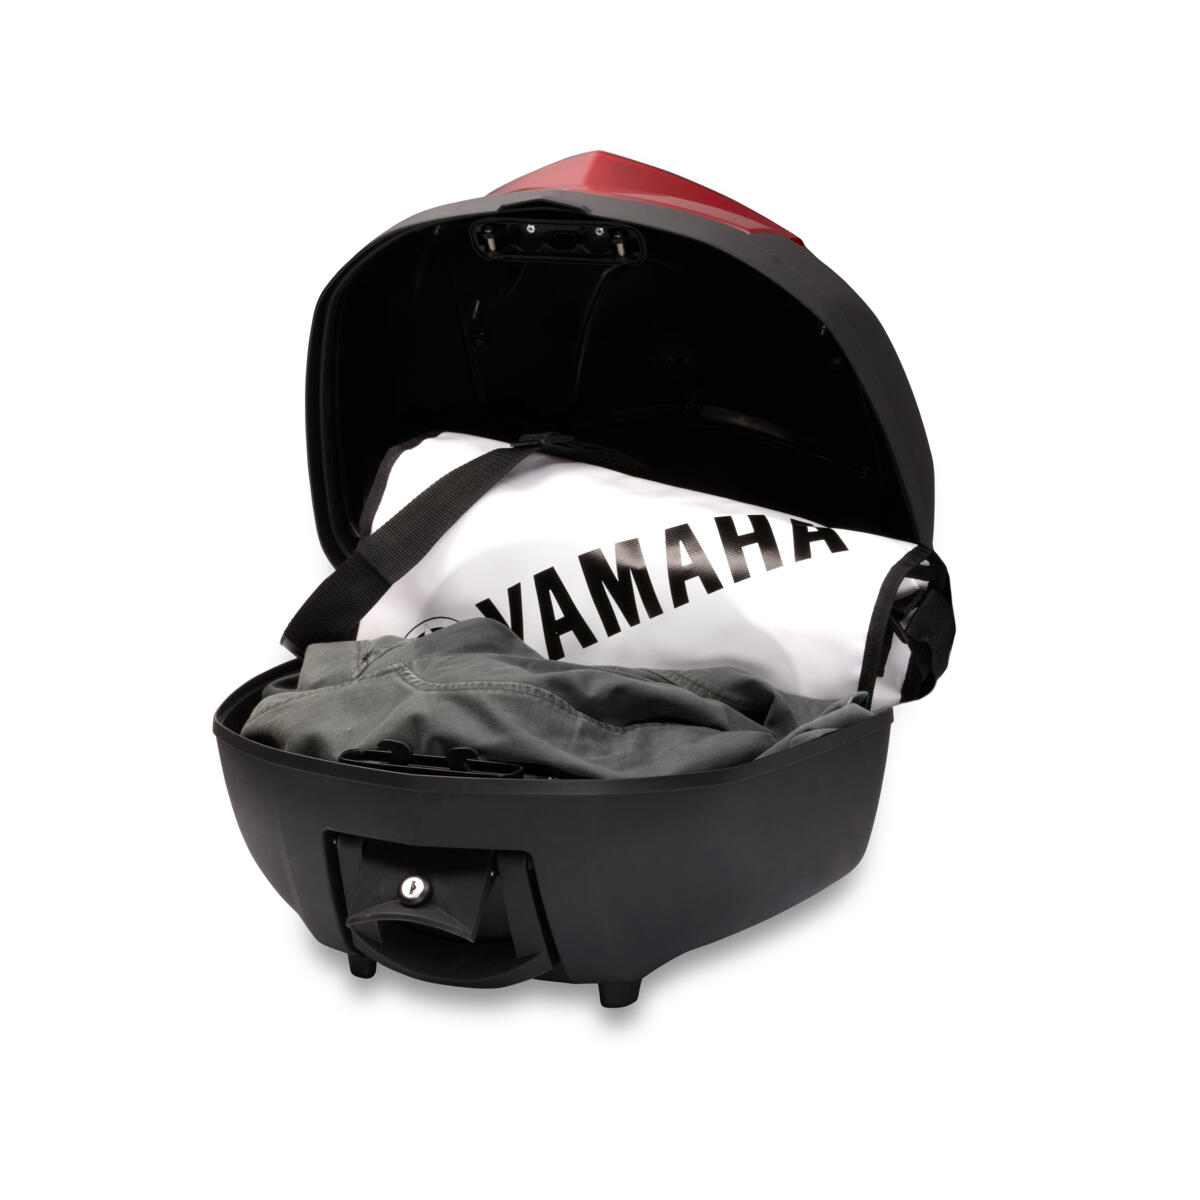 Hoogwaardige topkoffer voor extra bagage-/opbergcapaciteit op je Yamaha.